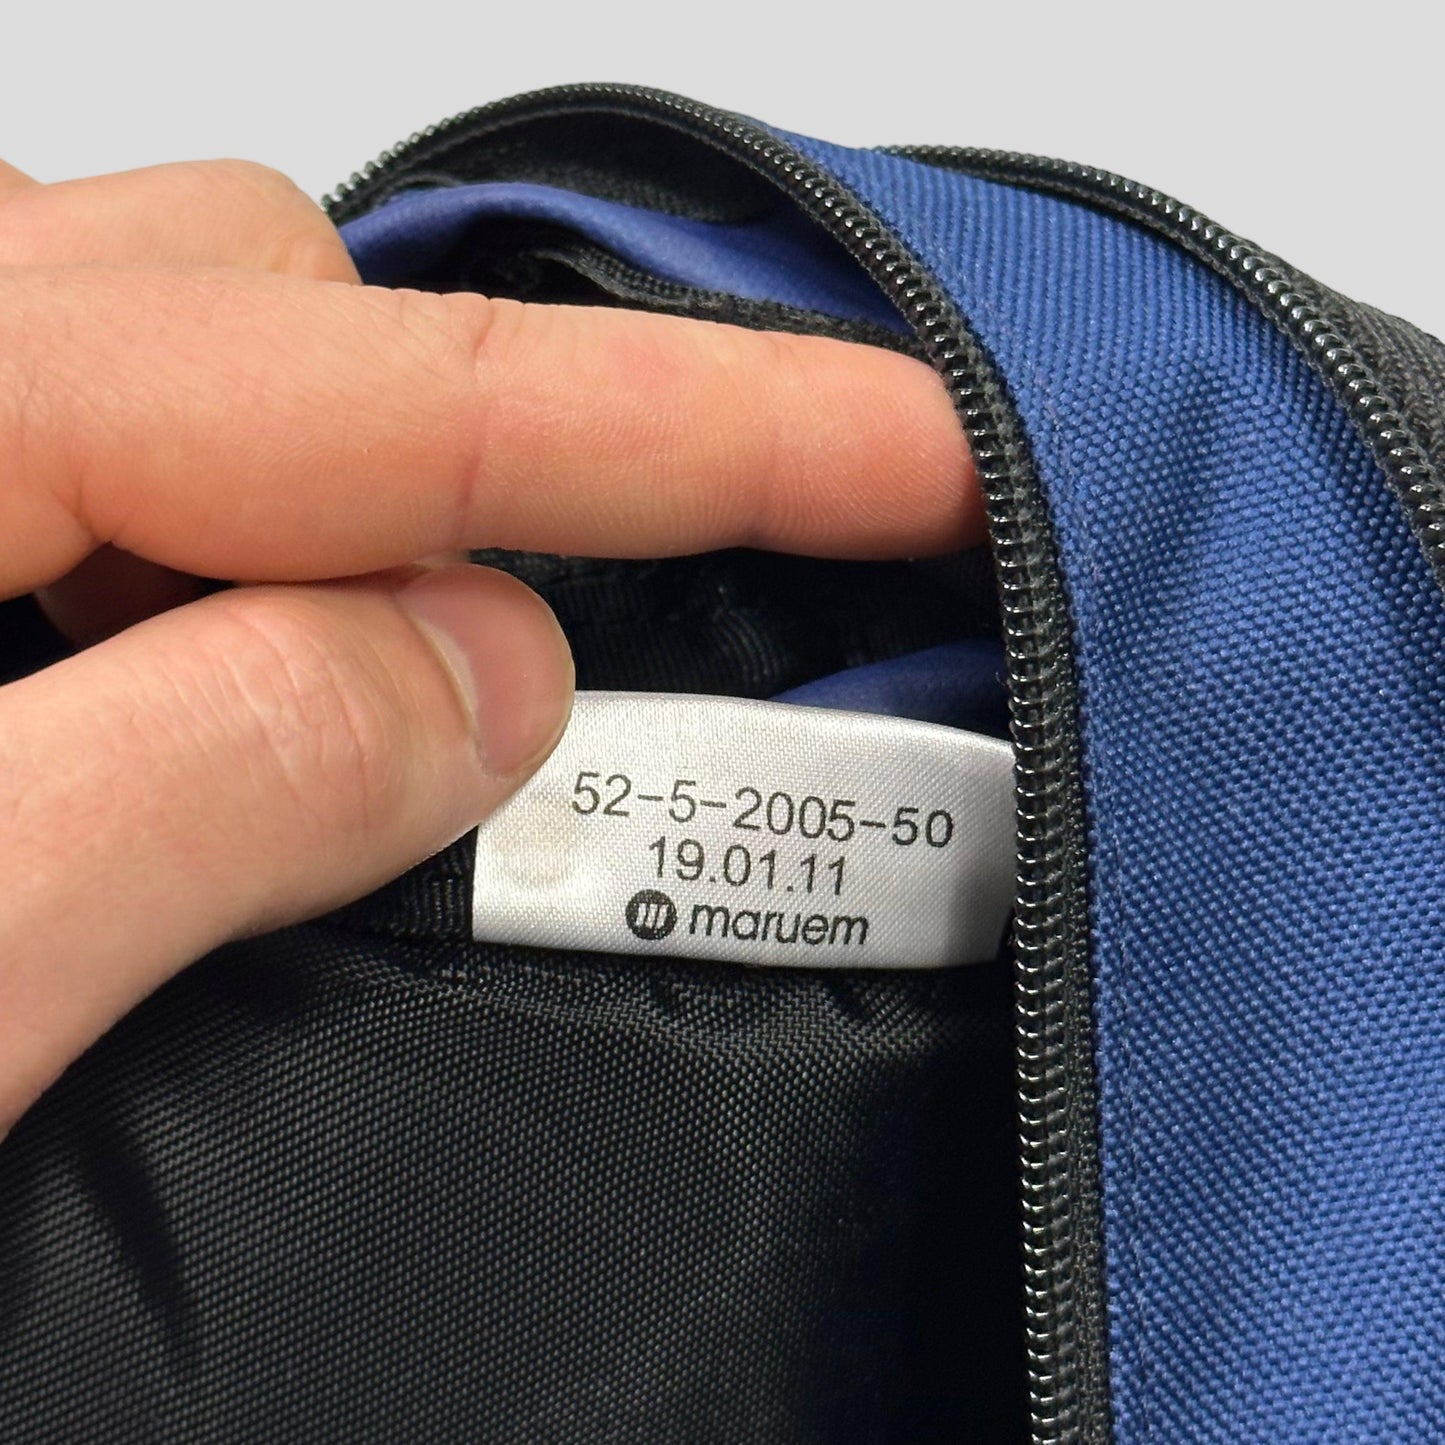 Nike 2001 Utility Tri-harness Slingbag - Known Source